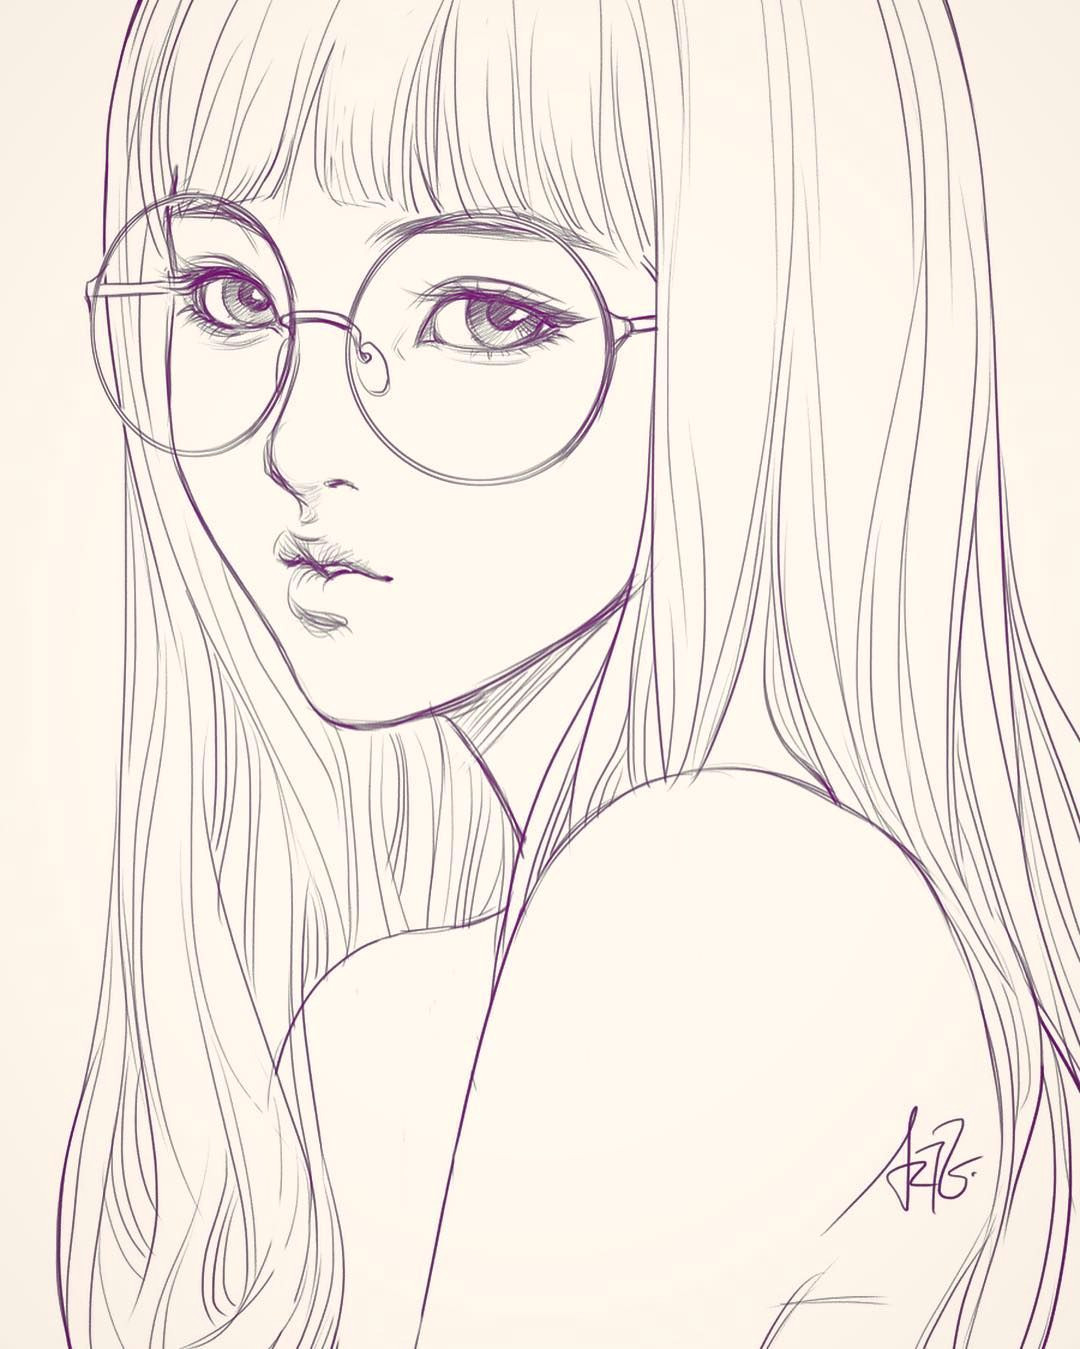 Drawing Manga Girl Eyes Last Sketch Of Girl with Glasses Having Bad Backache It Hurts